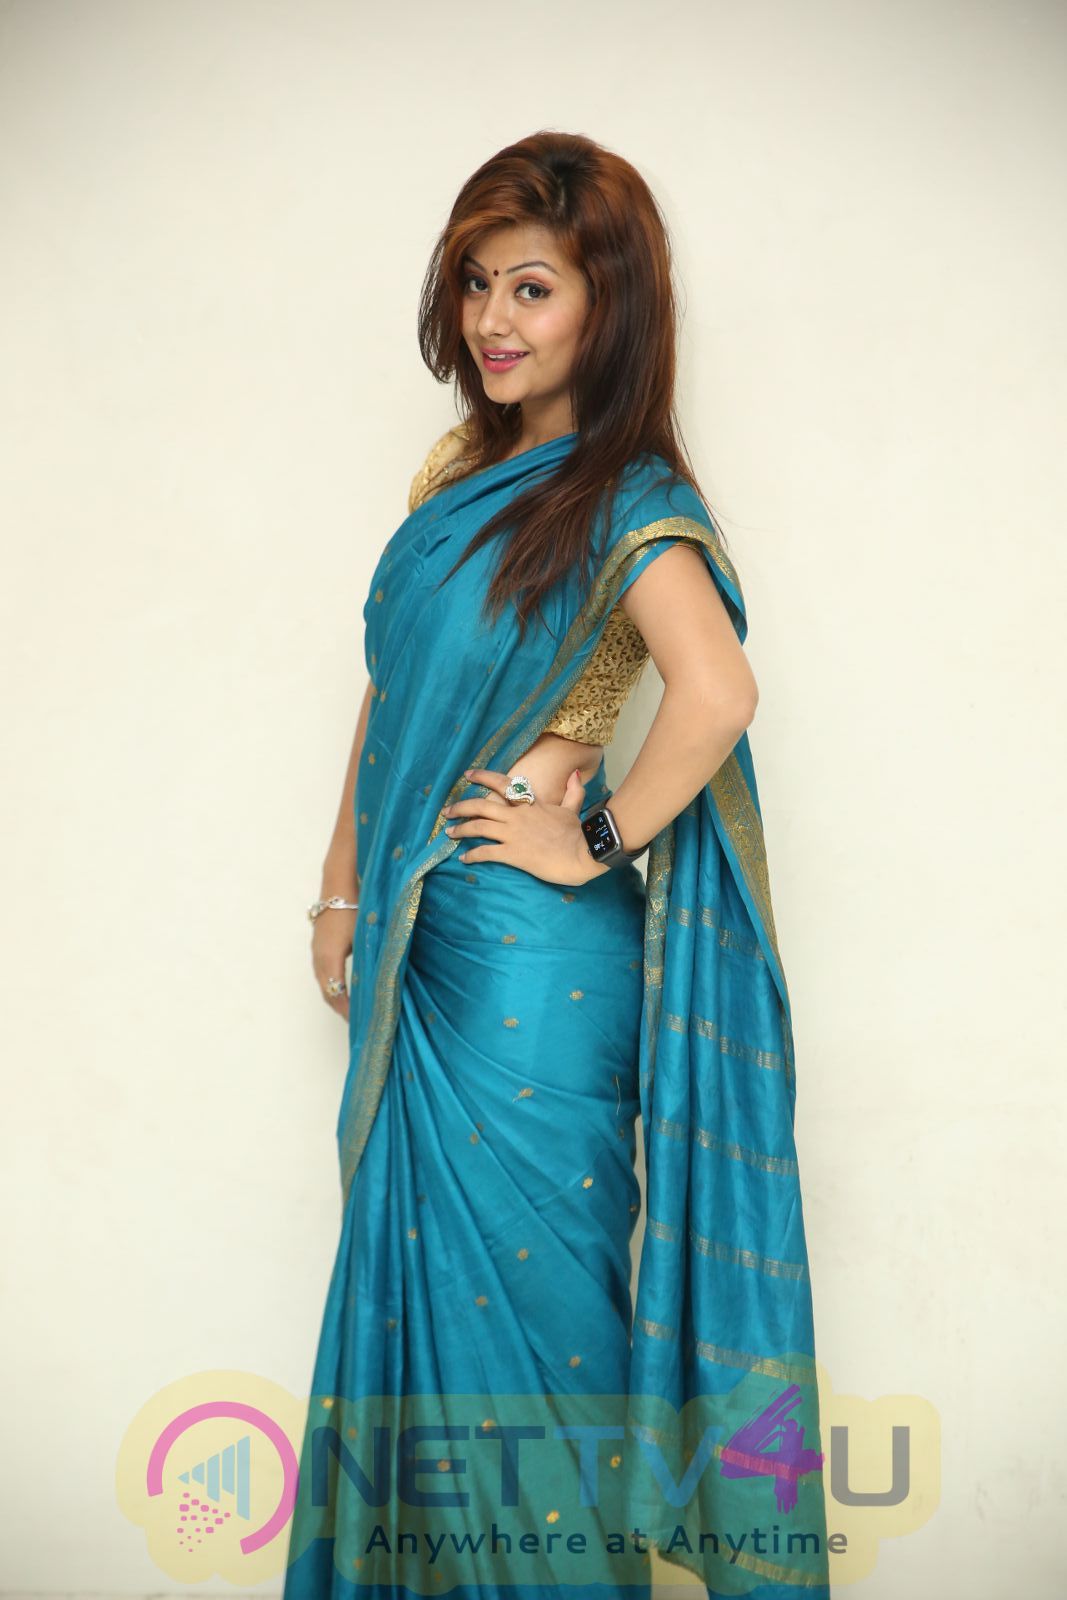 Actress Shubhangi Pant Lovely Photos Telugu Gallery